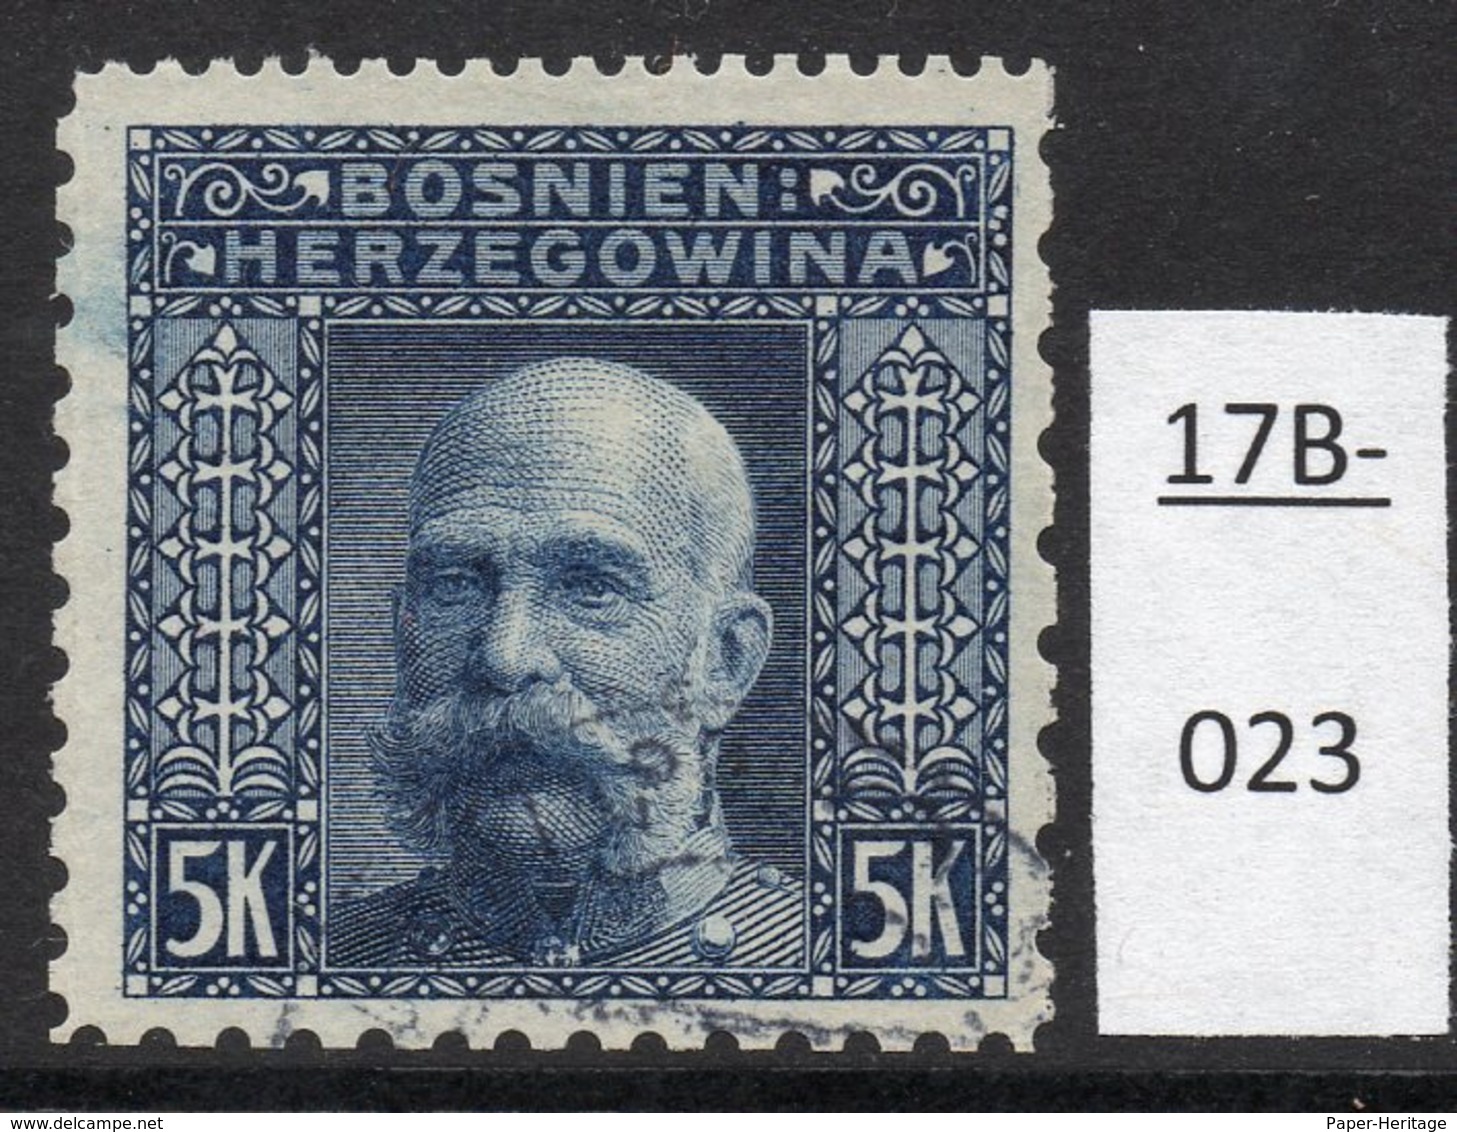 Bosnia Bosnien 1906 5Kr Emperor Franz Josef I ‘Coleman’ Perf  12x6x9x9 (Perf: 3122) Used (cto) - Bosnia And Herzegovina